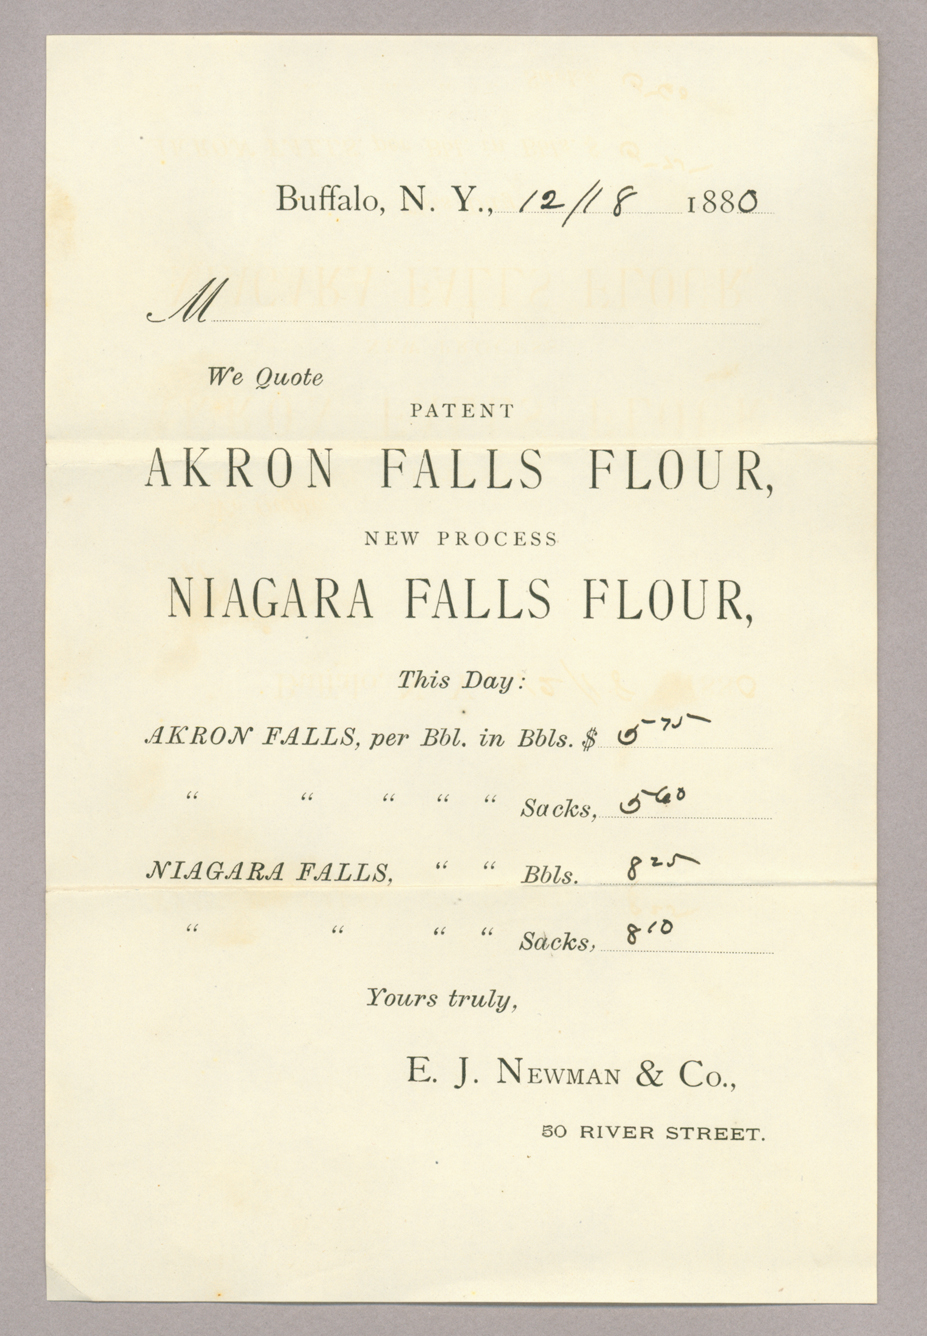 Letters. E. J. Newman & Co., Buffalo, New York, to Mr. John [E.] Brownlee, North Wharton, Pennsylvania, Letter 1, Page 1